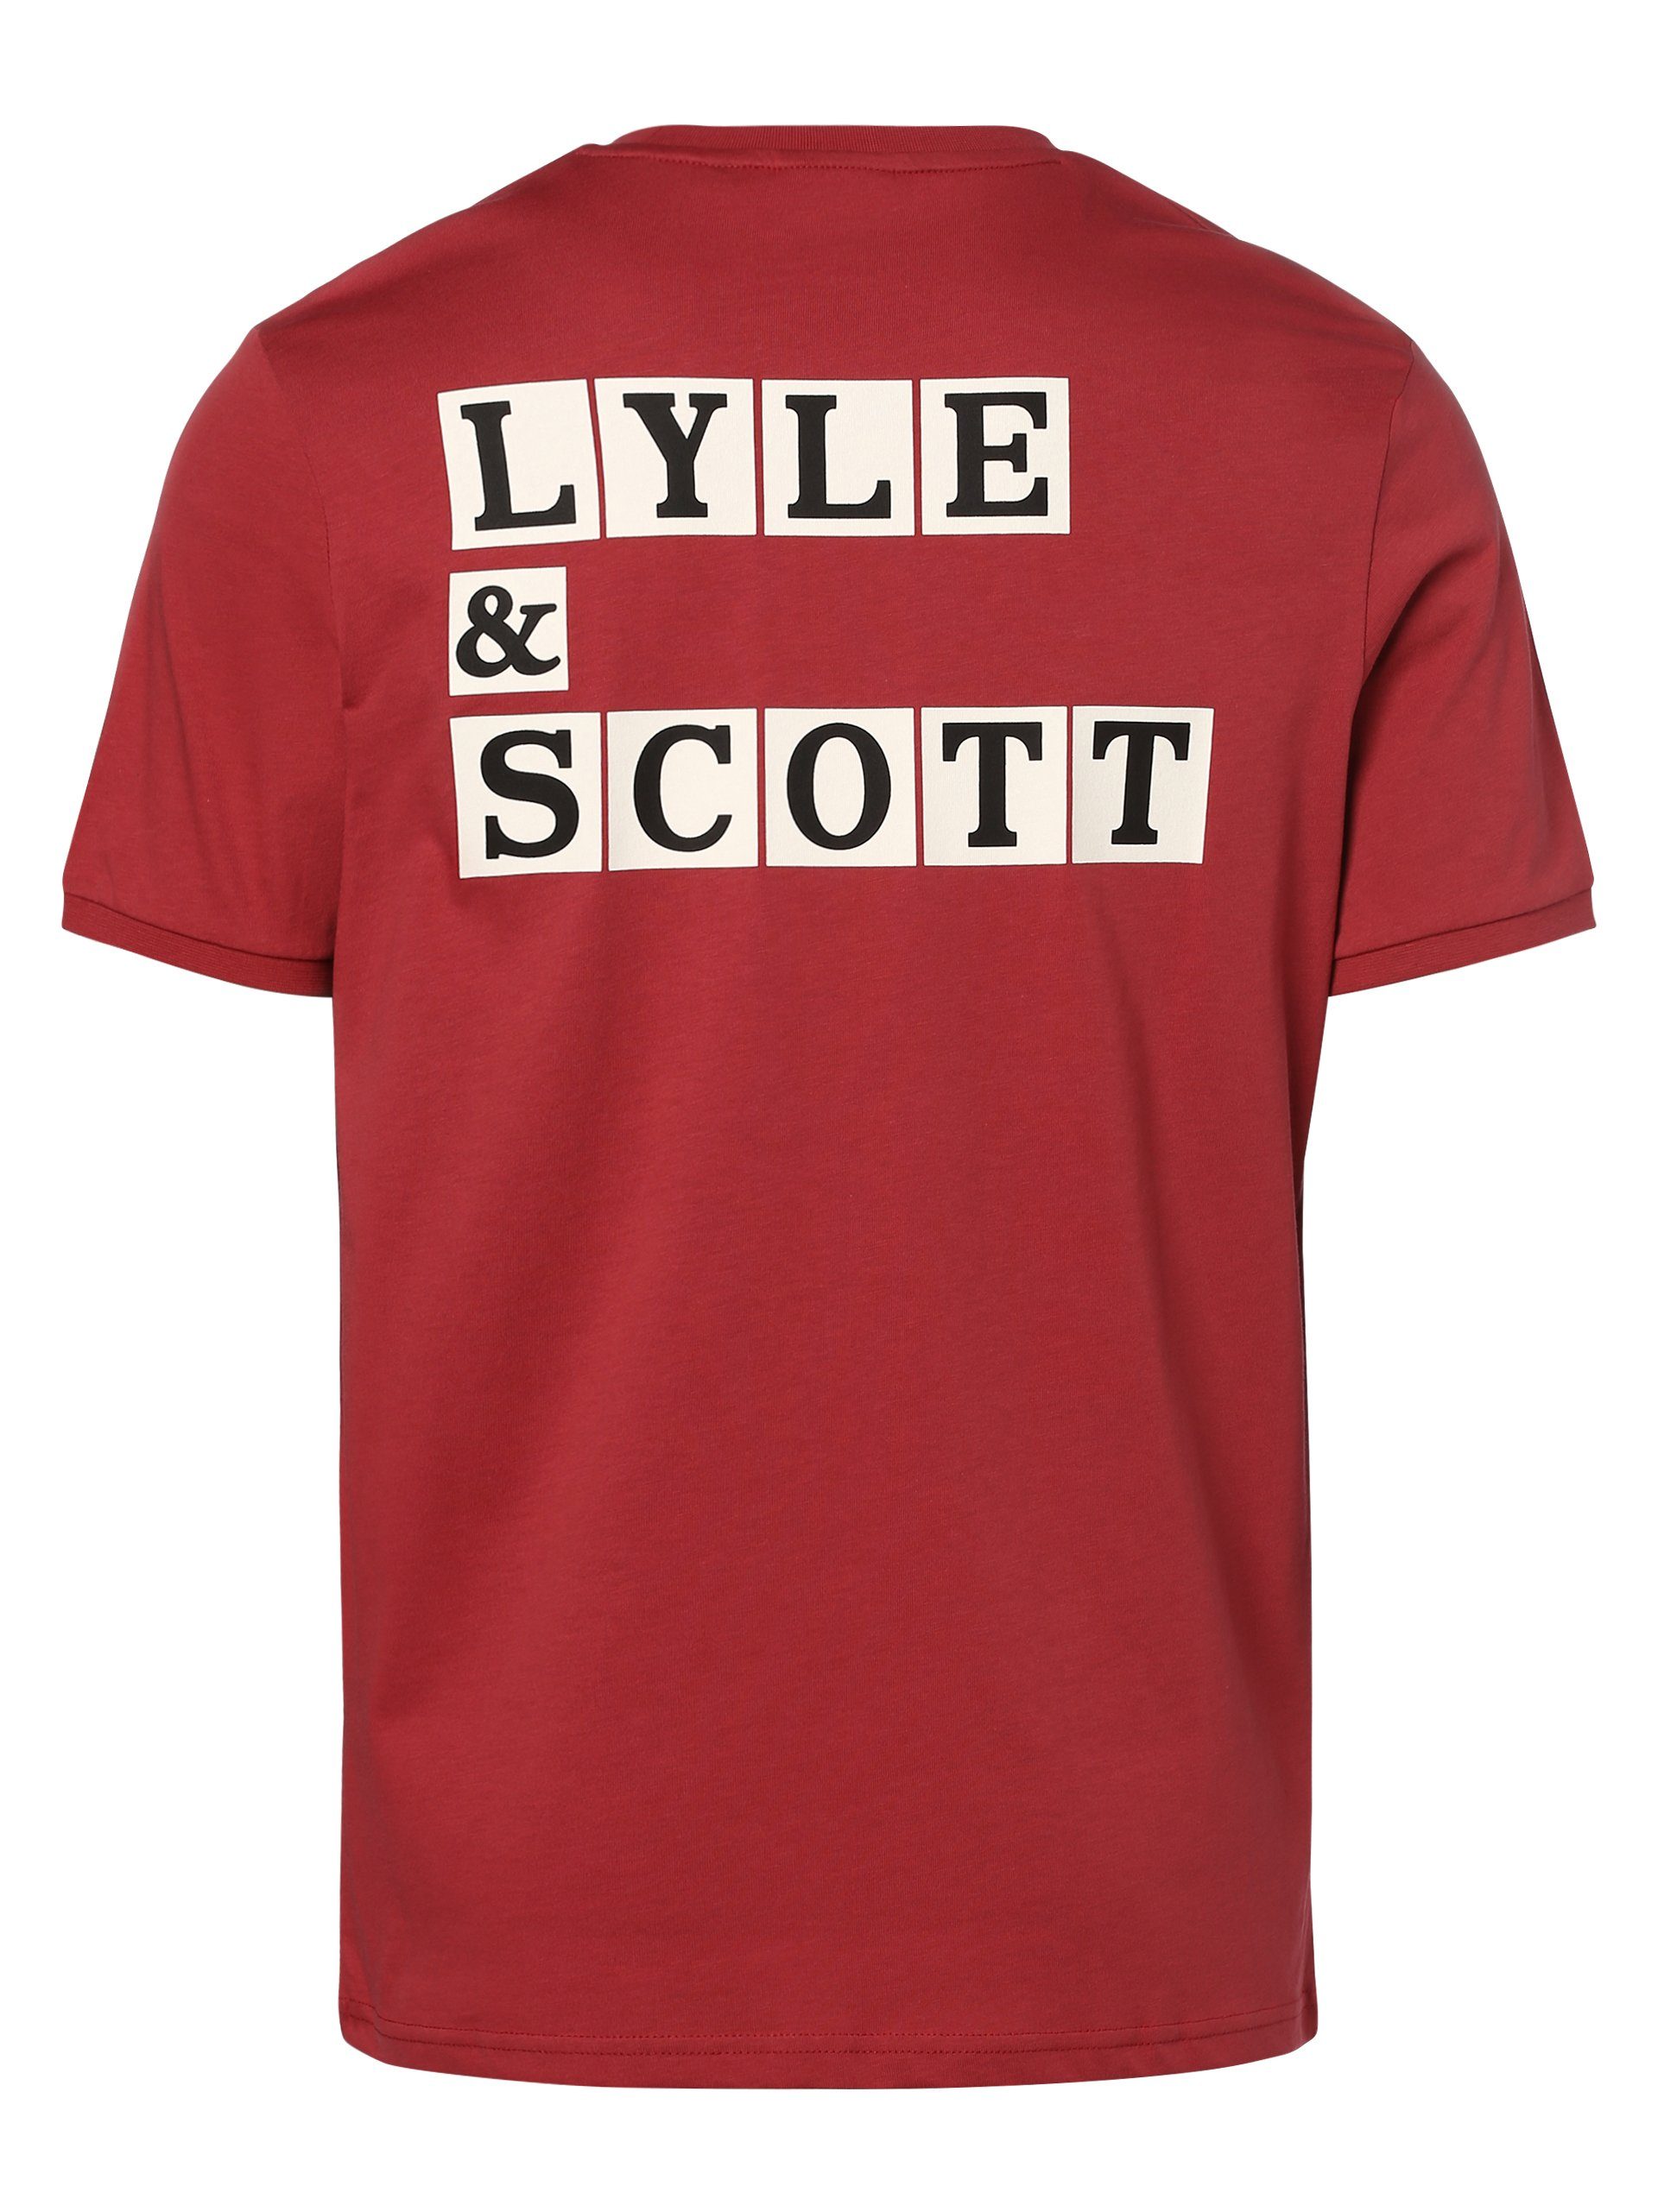 Lyle & Scott T-Shirt himbeer